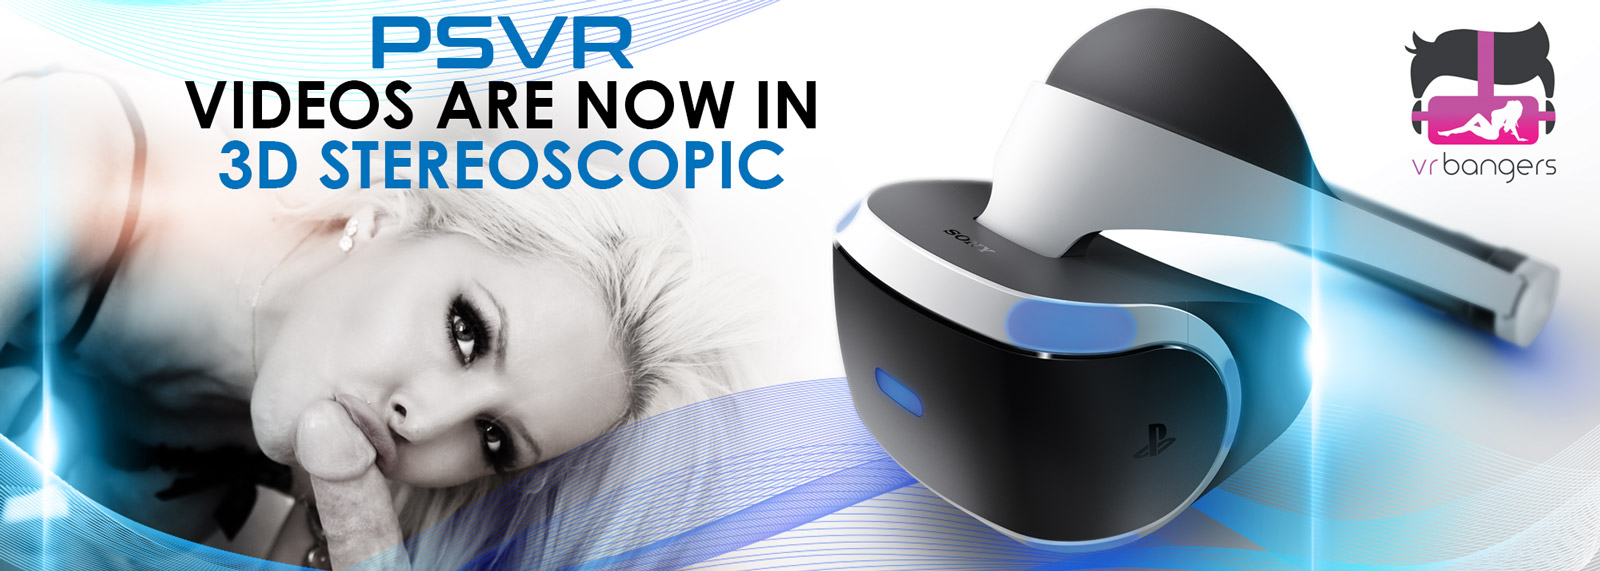 linned ribben Kor VR Bangers Unleashes First Hack Ever For PSVR Stereoscopic 3D Videos | VR  Bangers